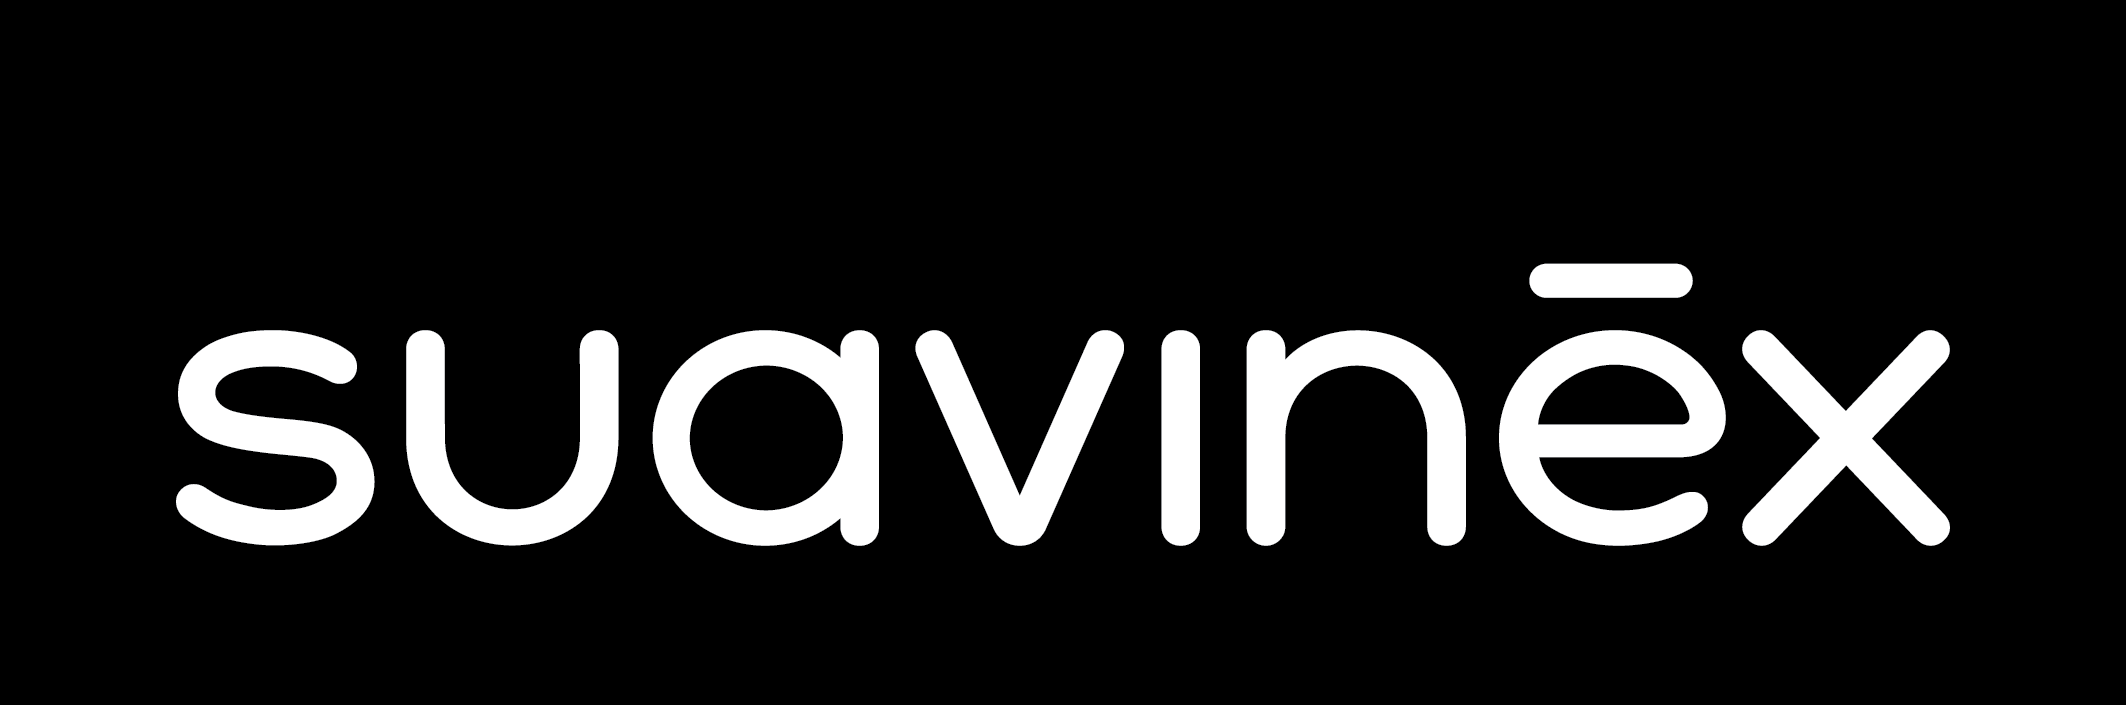 Suavinex Logo